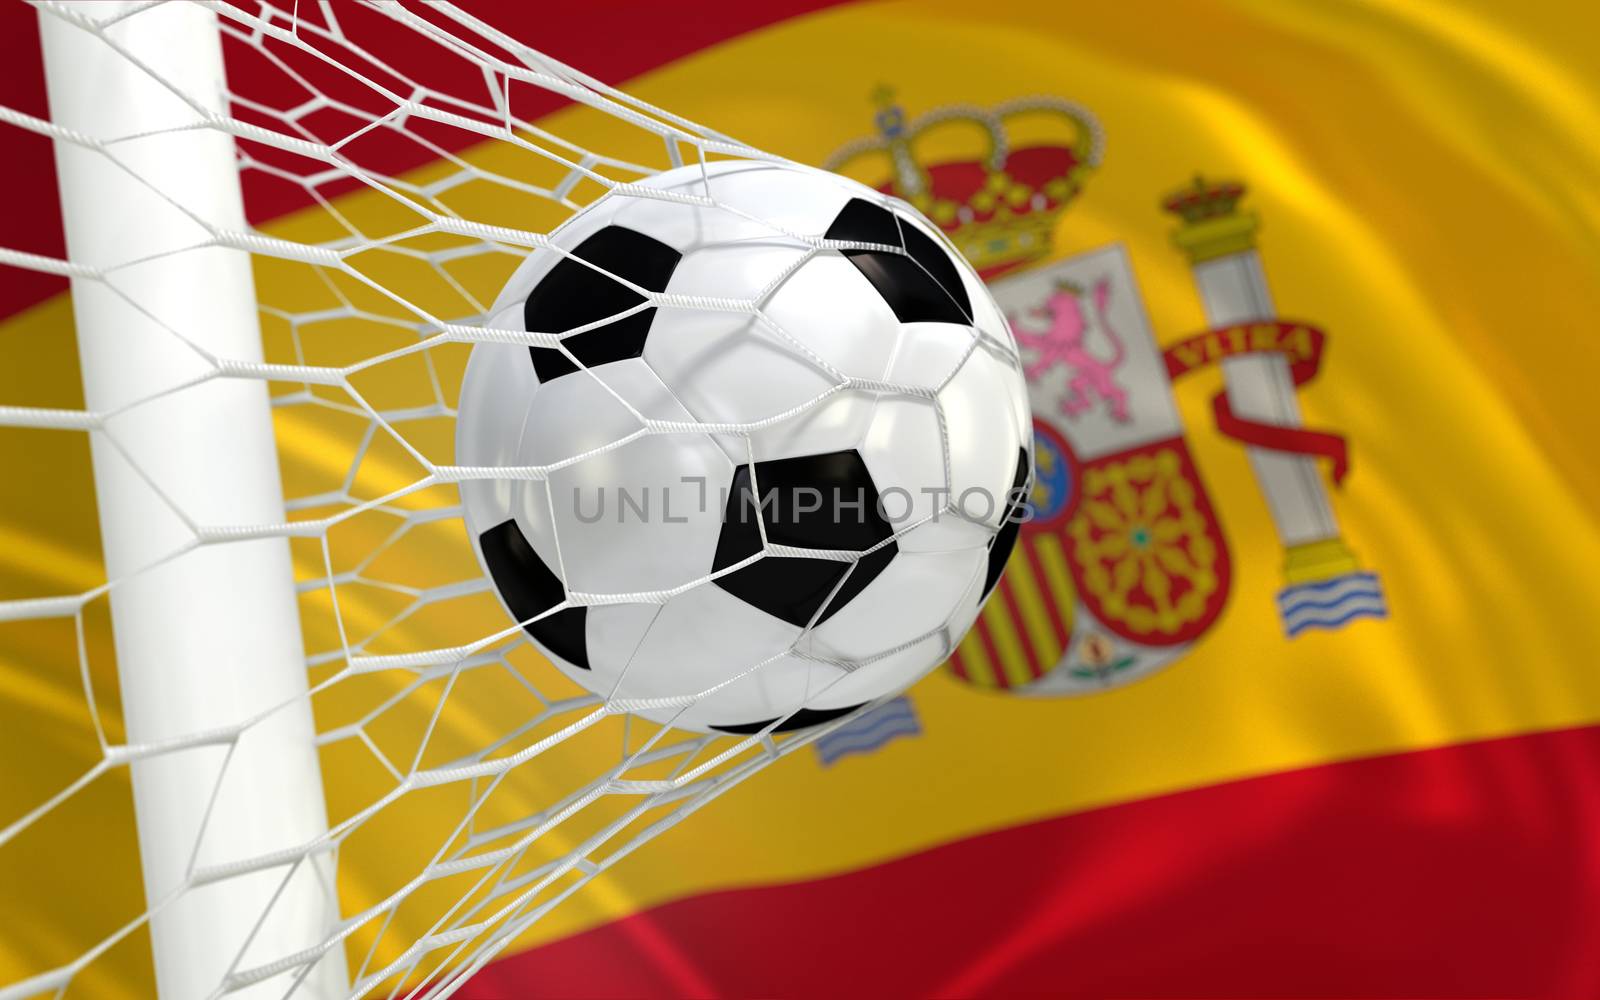 Spain waving flag and soccer ball in goal net by Barbraford